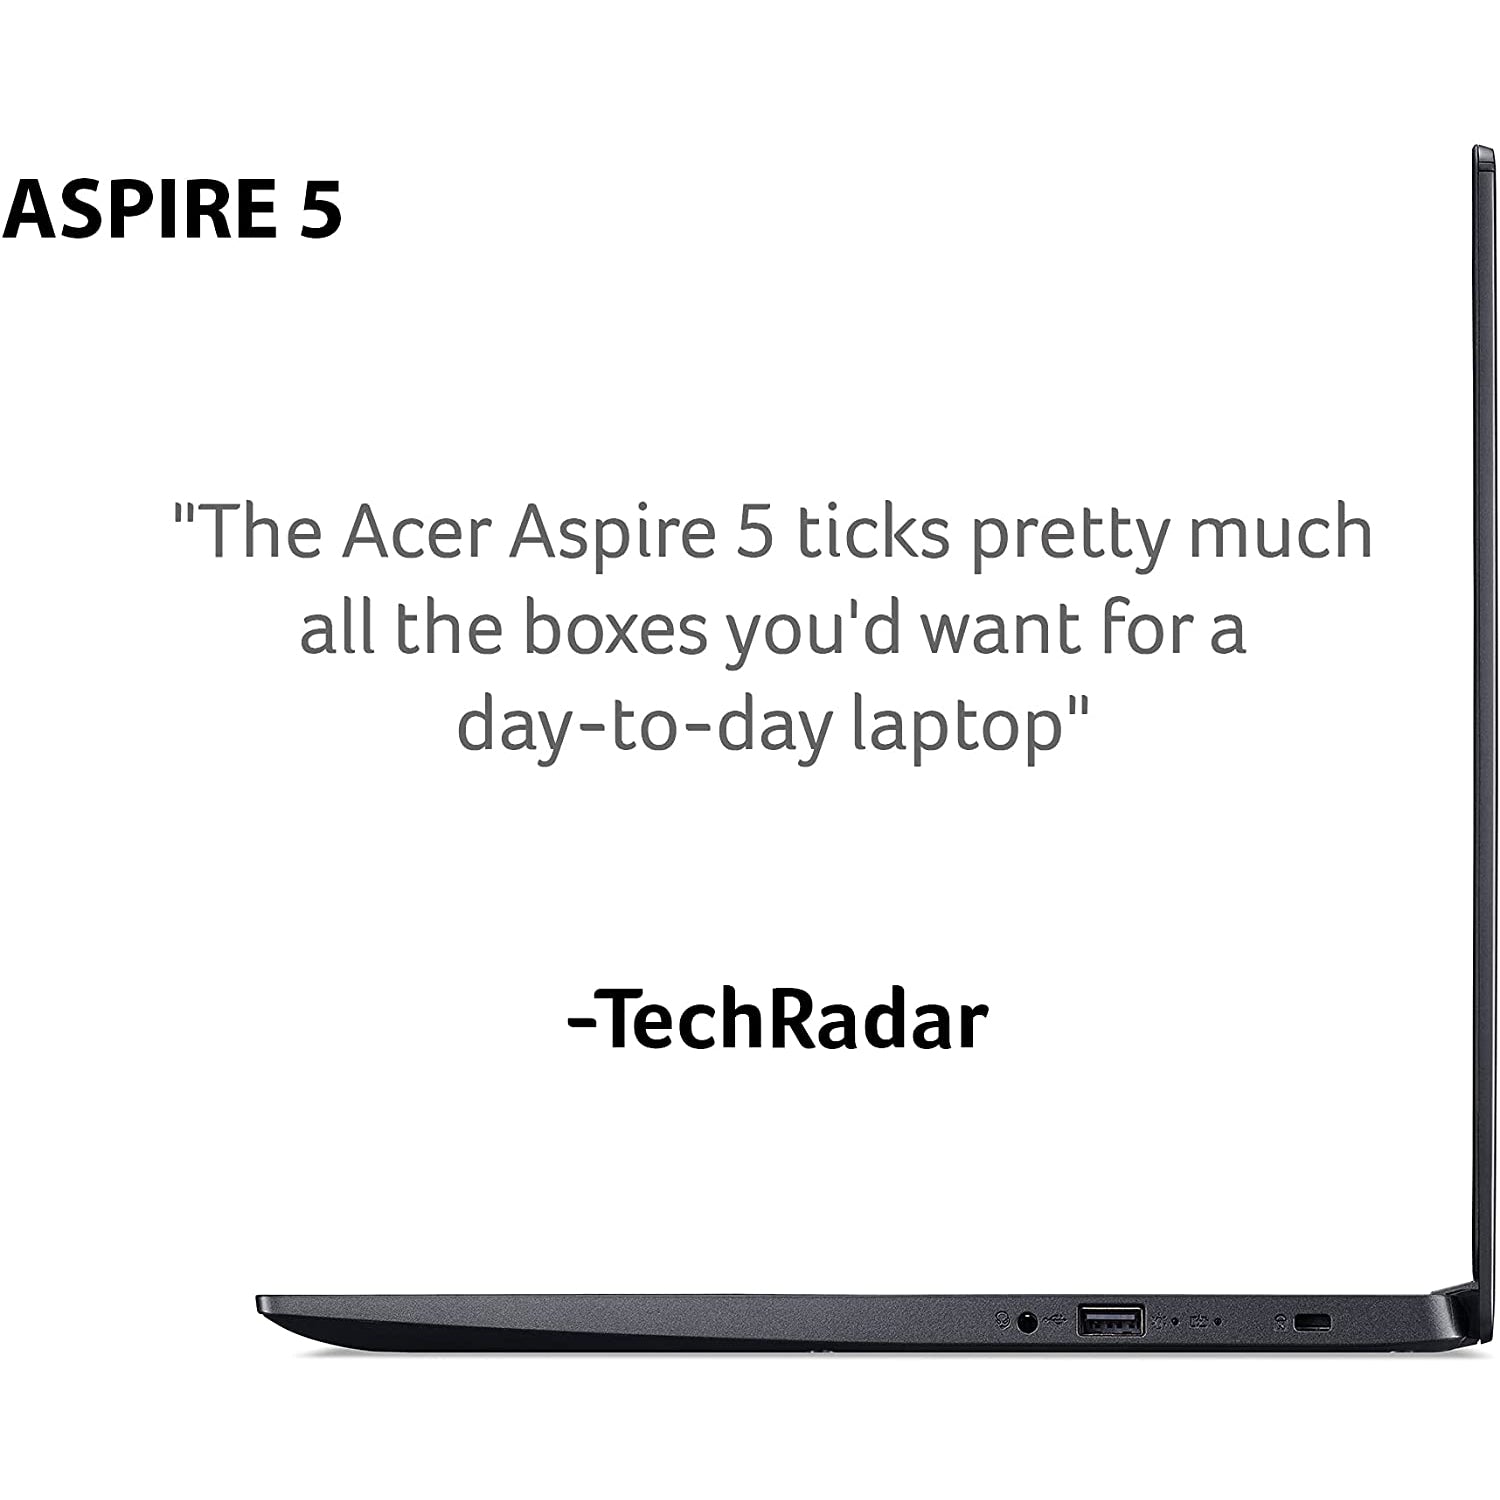 Acer Aspire 5 A515-55 15.6 inch Laptop, Intel Core i5-1035G1, 8GB, 512GB SSD, Full HD Display, Windows 10, Black